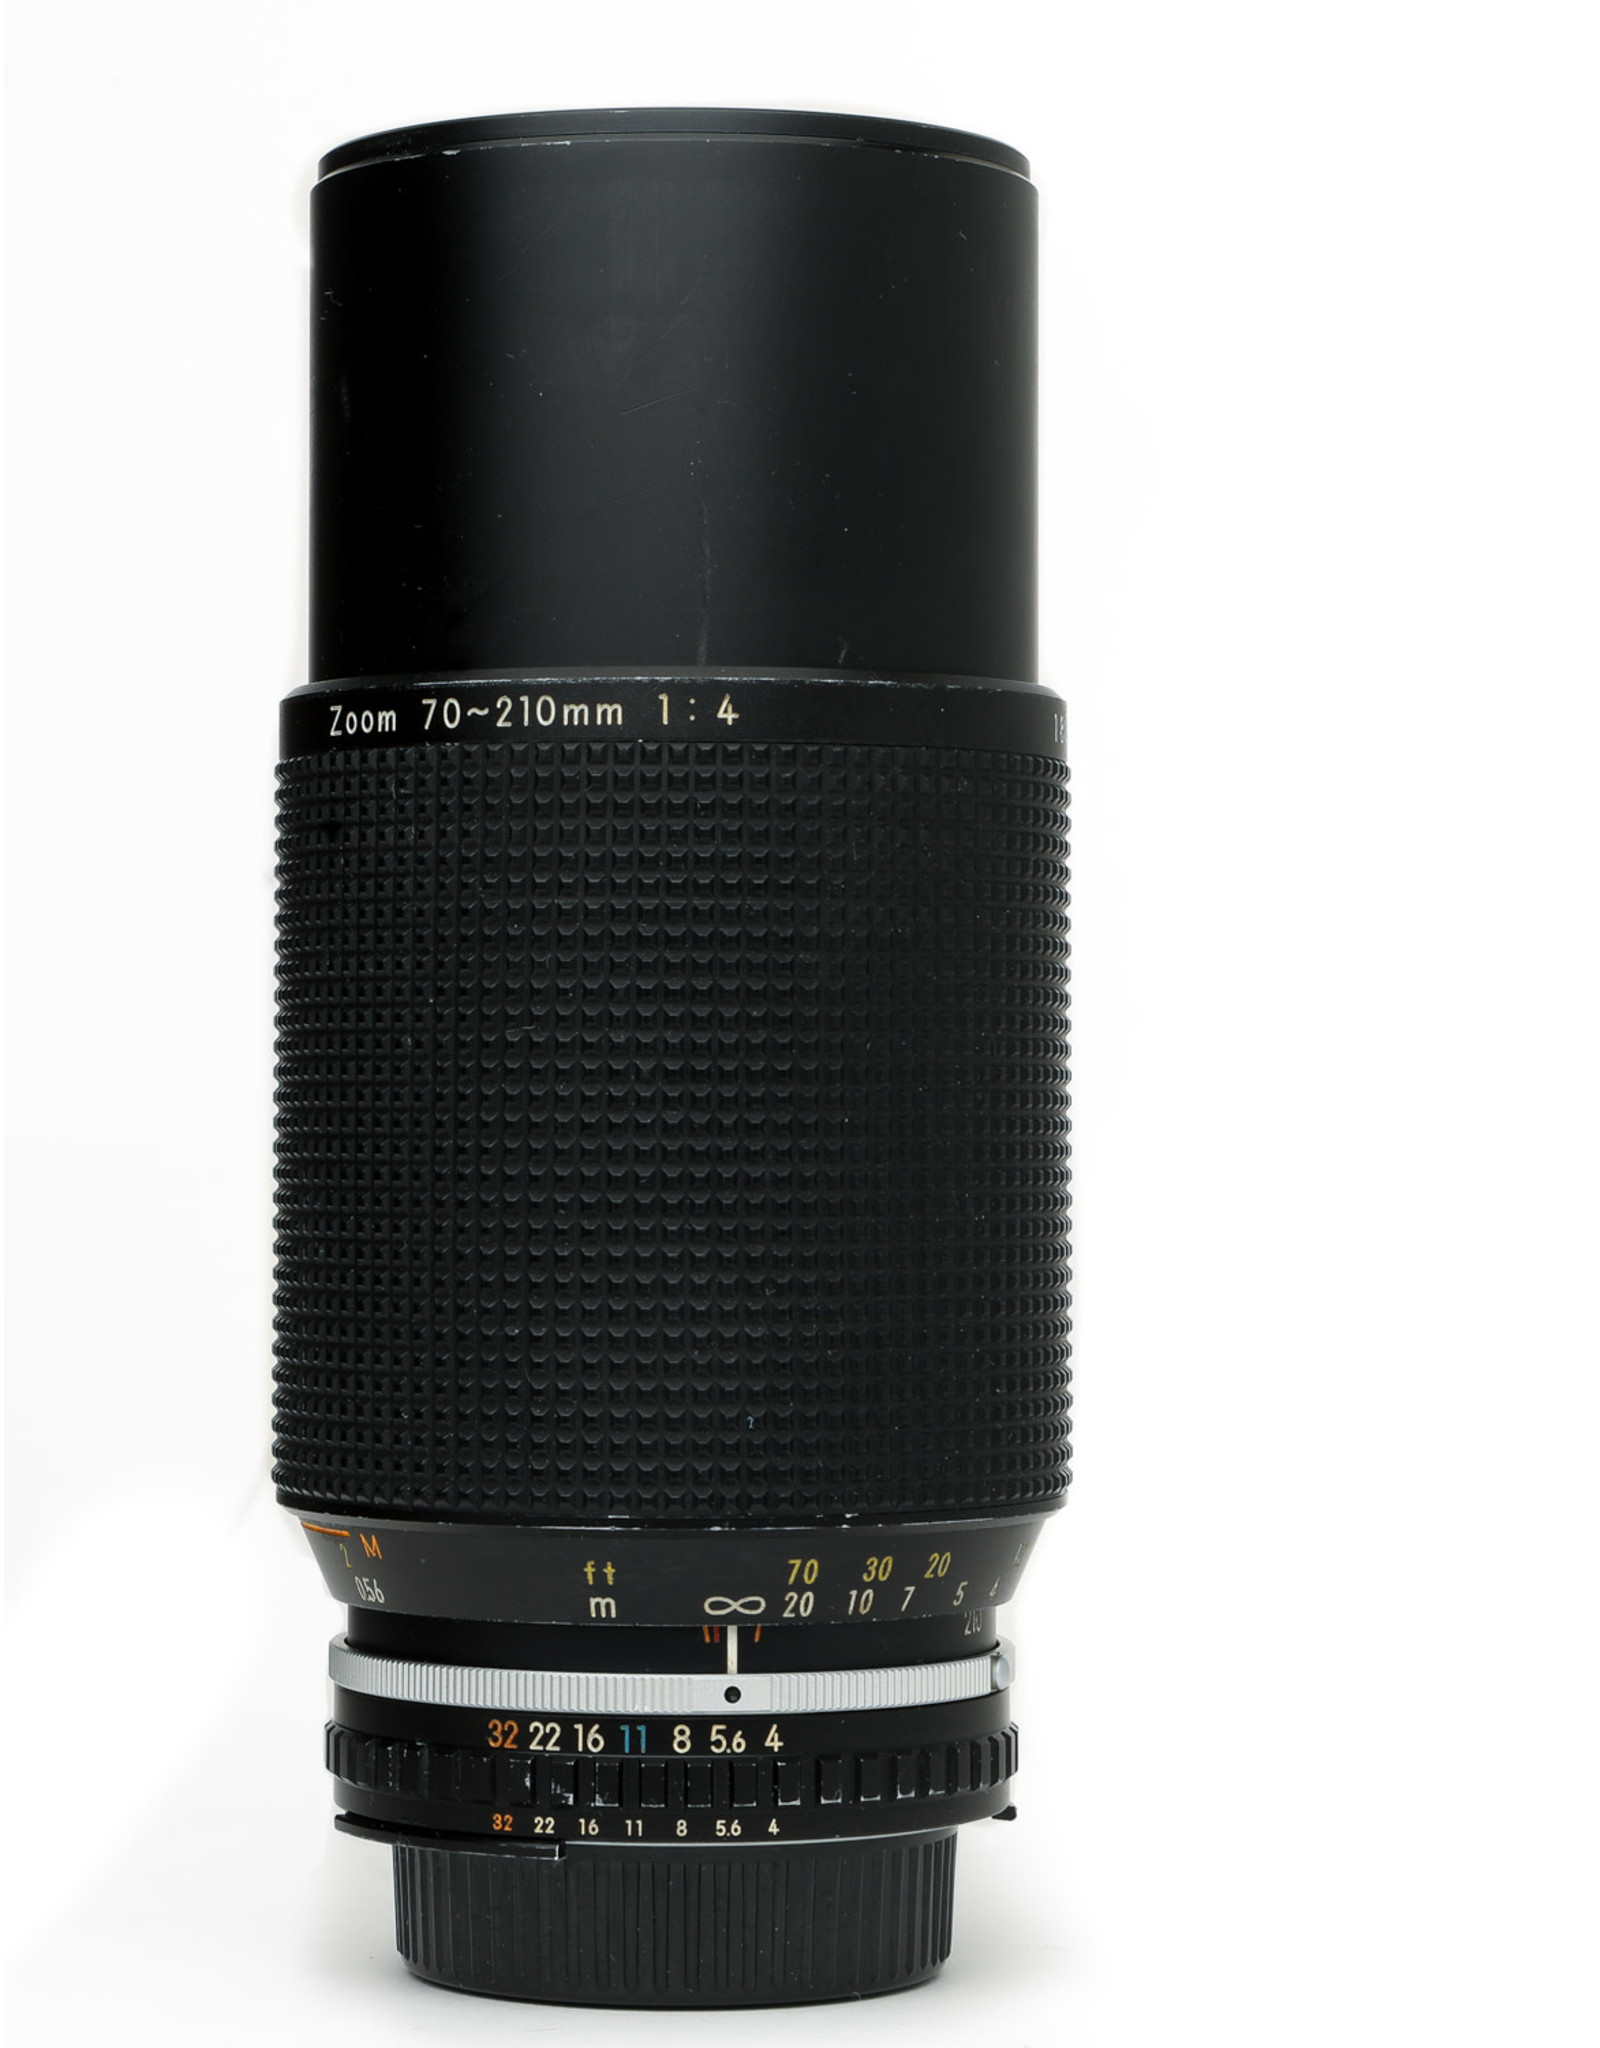 Nikon Nikon 70-210 f4.0 Series E Lens